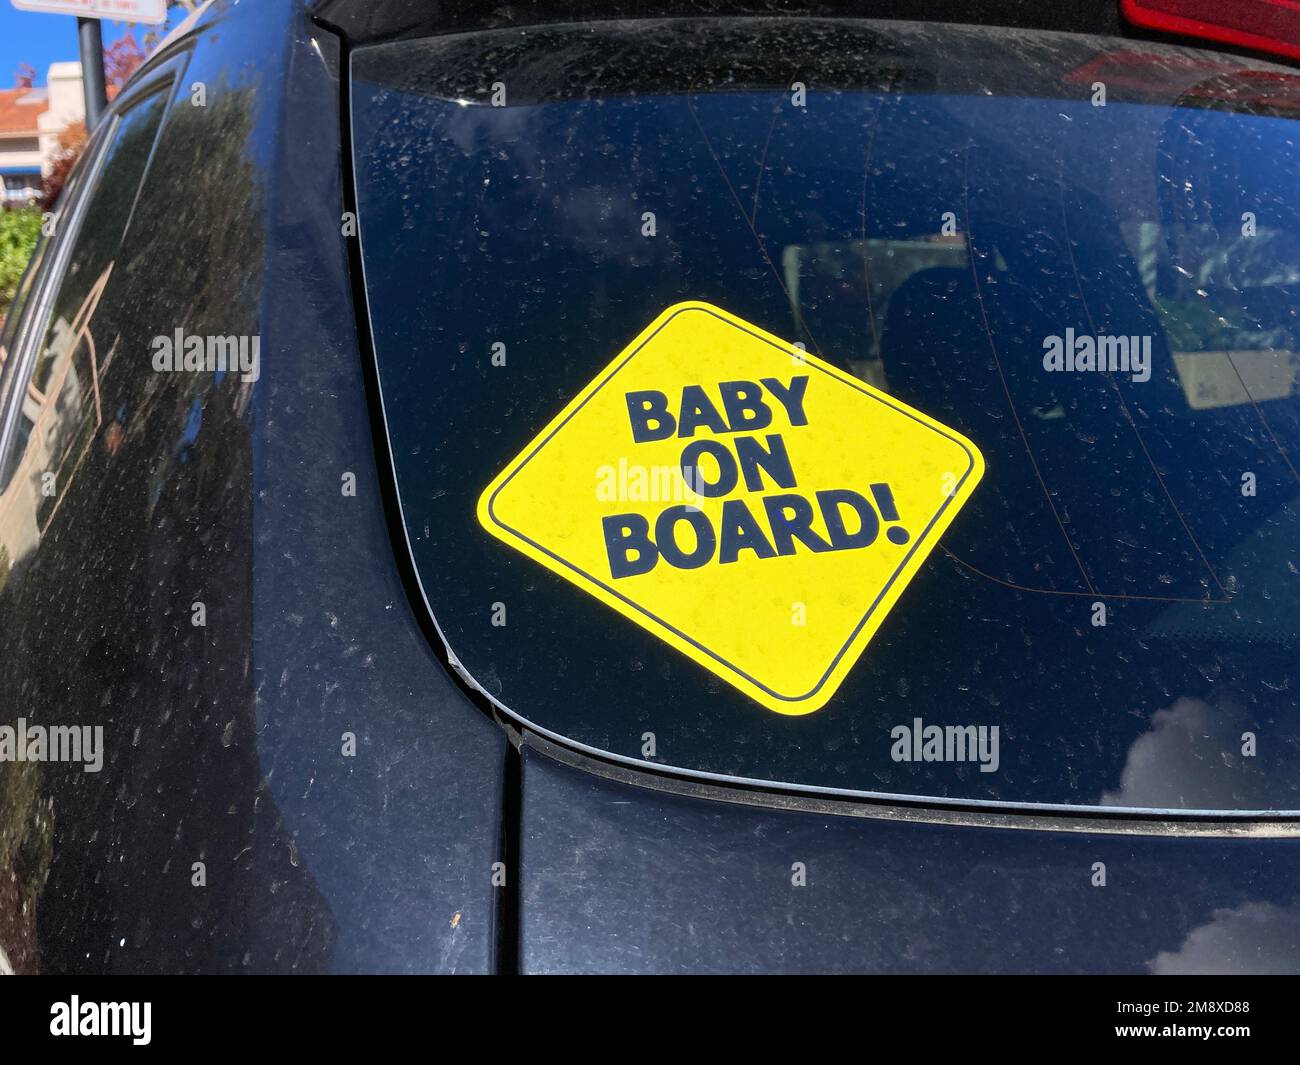 https://c8.alamy.com/comp/2M8XD88/baby-on-board-warning-sign-yellow-bumper-sticker-on-the-car-rear-door-2M8XD88.jpg